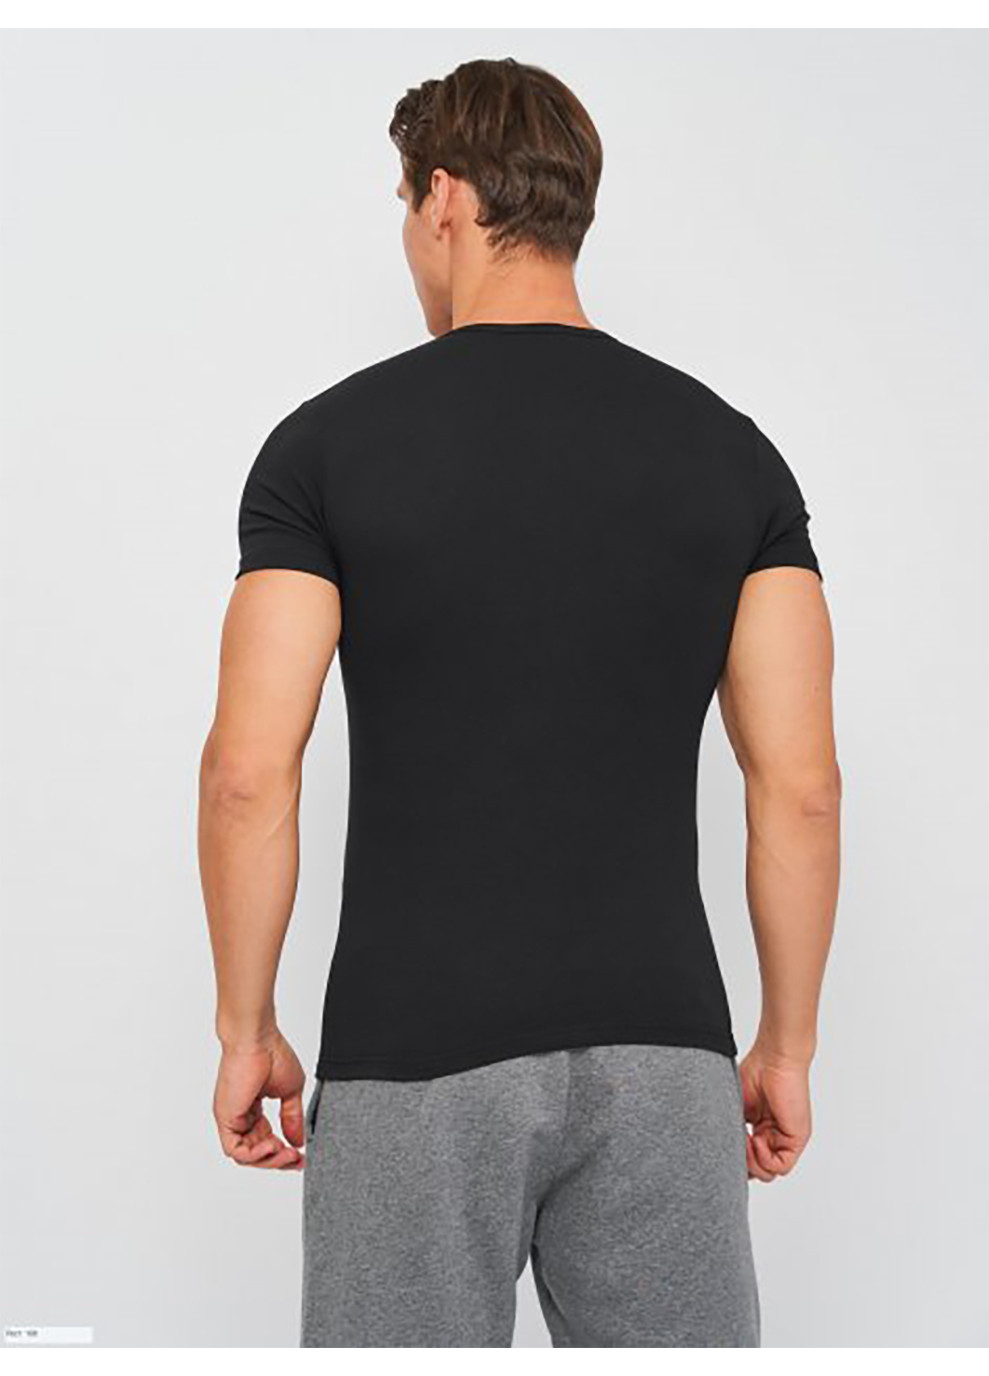 Черная футболка t-shirt mezza manica scollo v черный xl муж k1311 nero-xl Kappa